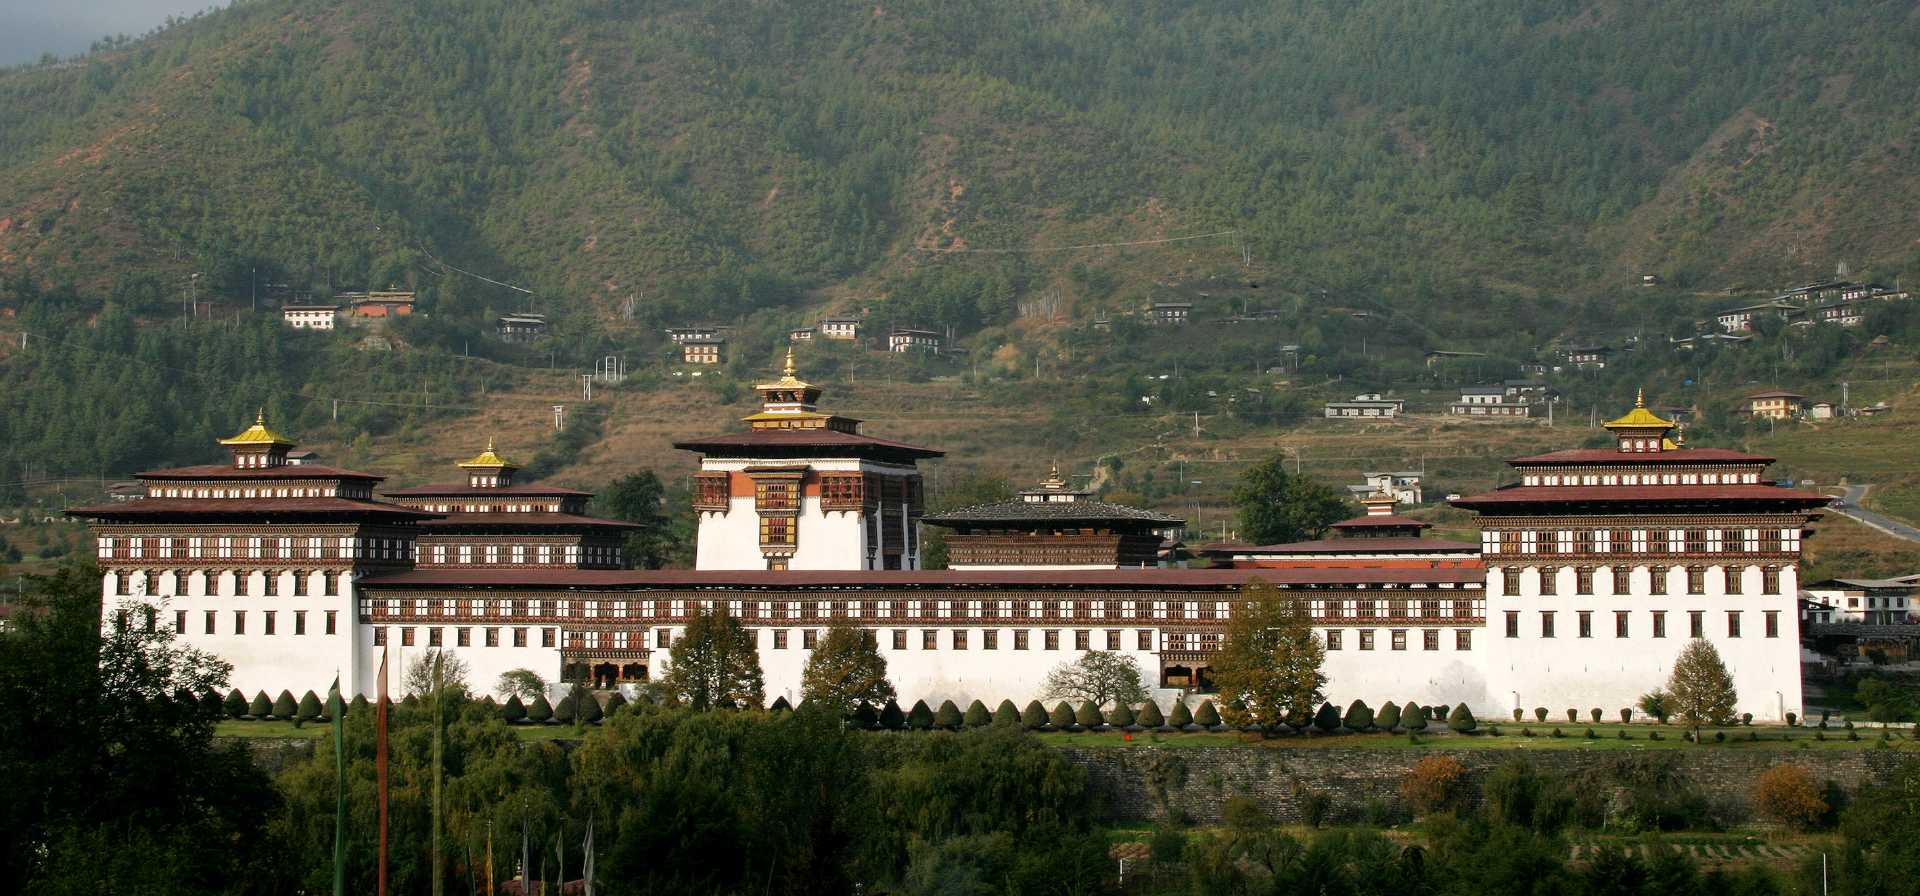 The Spirits of Bhutan